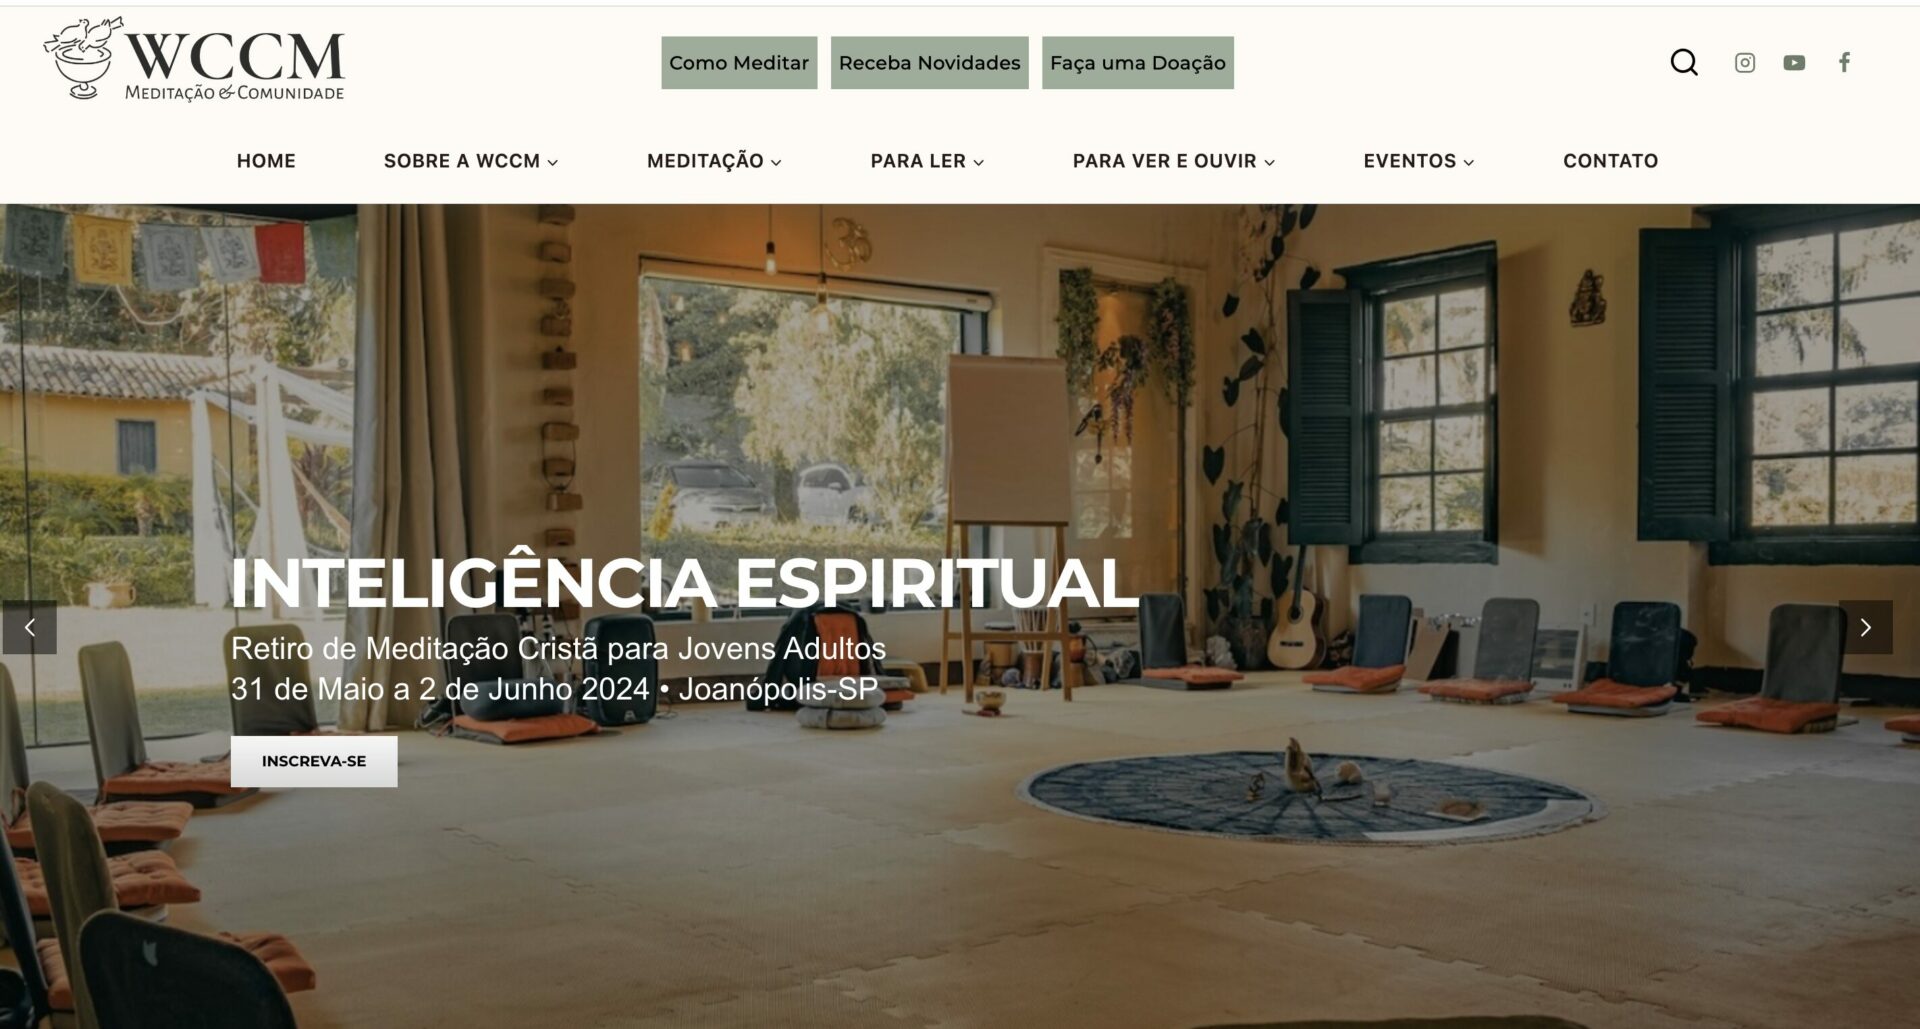 WCCM Brazil home page